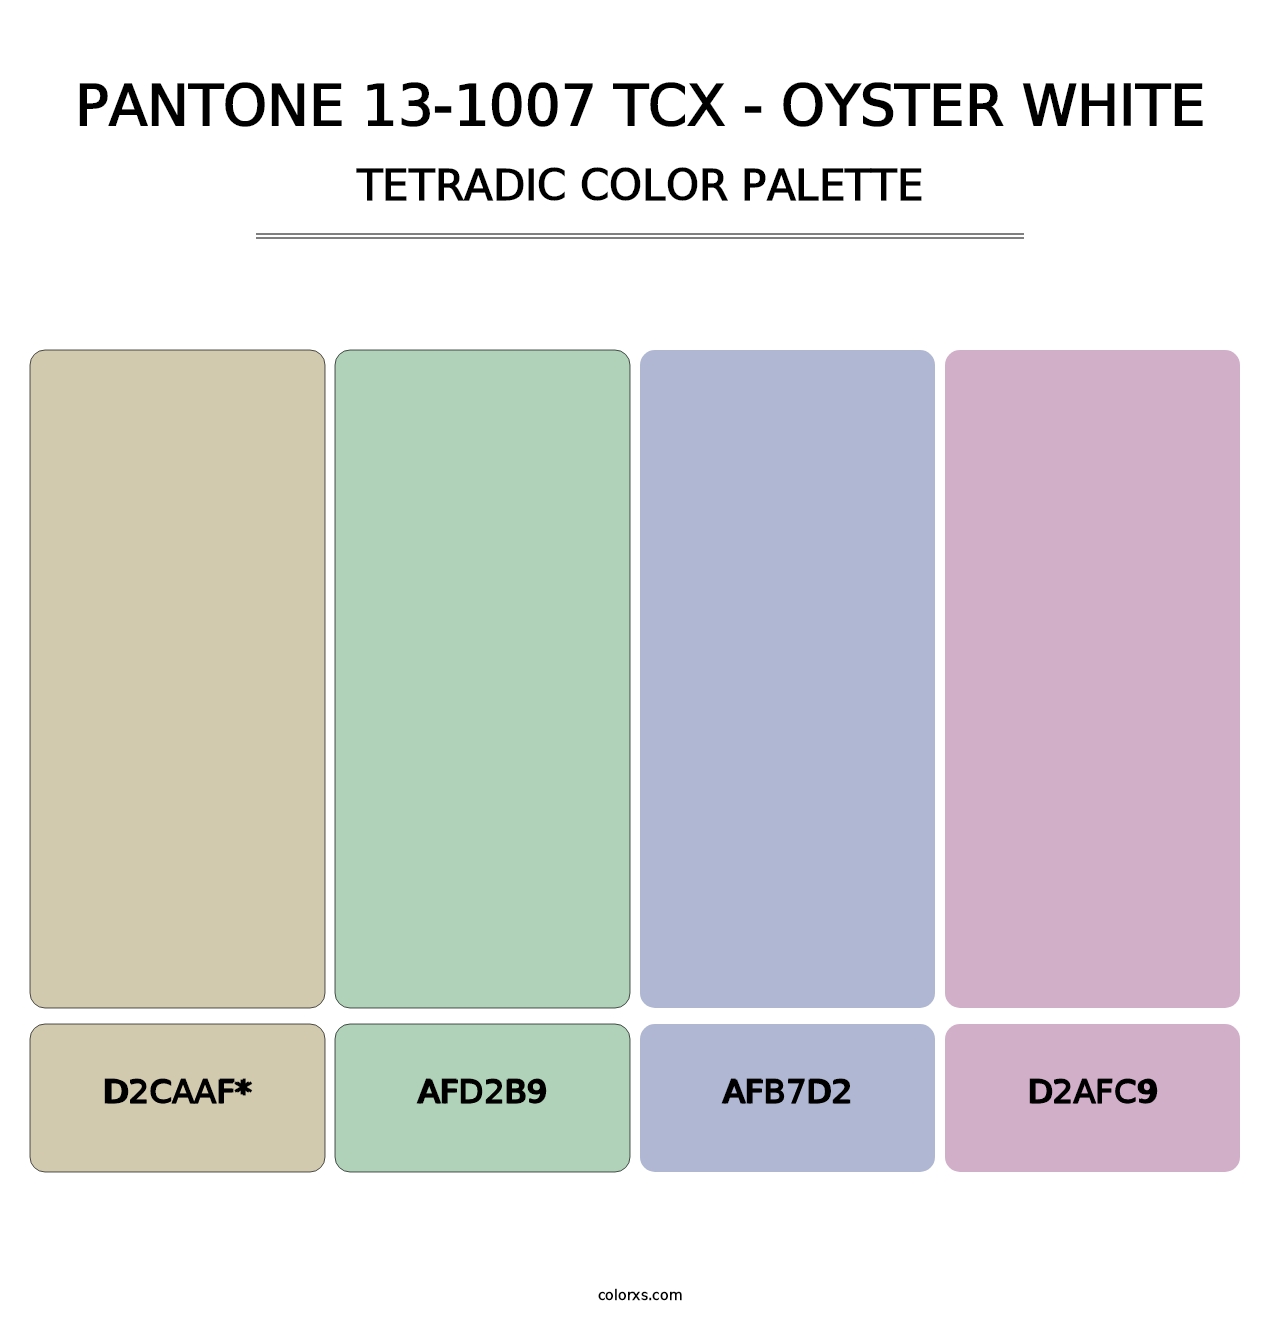 PANTONE 13-1007 TCX - Oyster White - Tetradic Color Palette